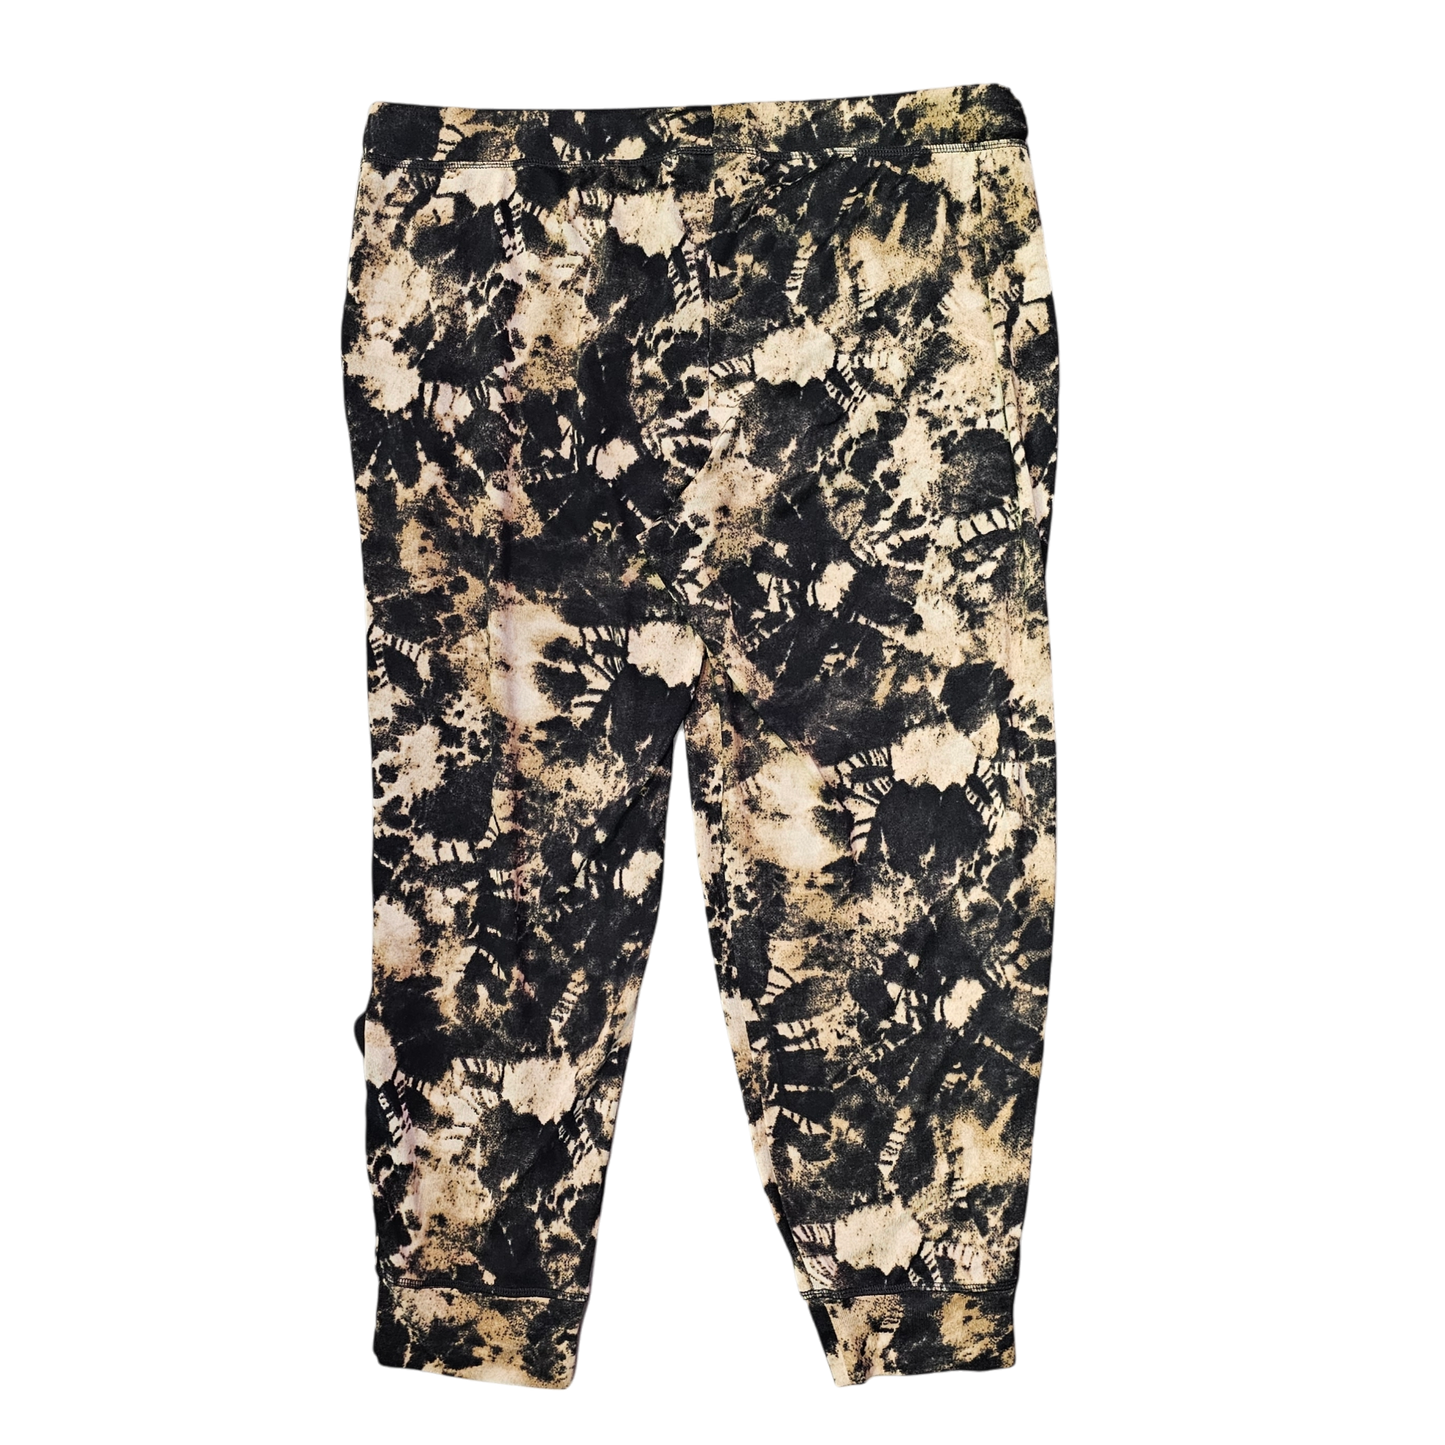 Pants Designer By Jenni Kayne  Size: 2x